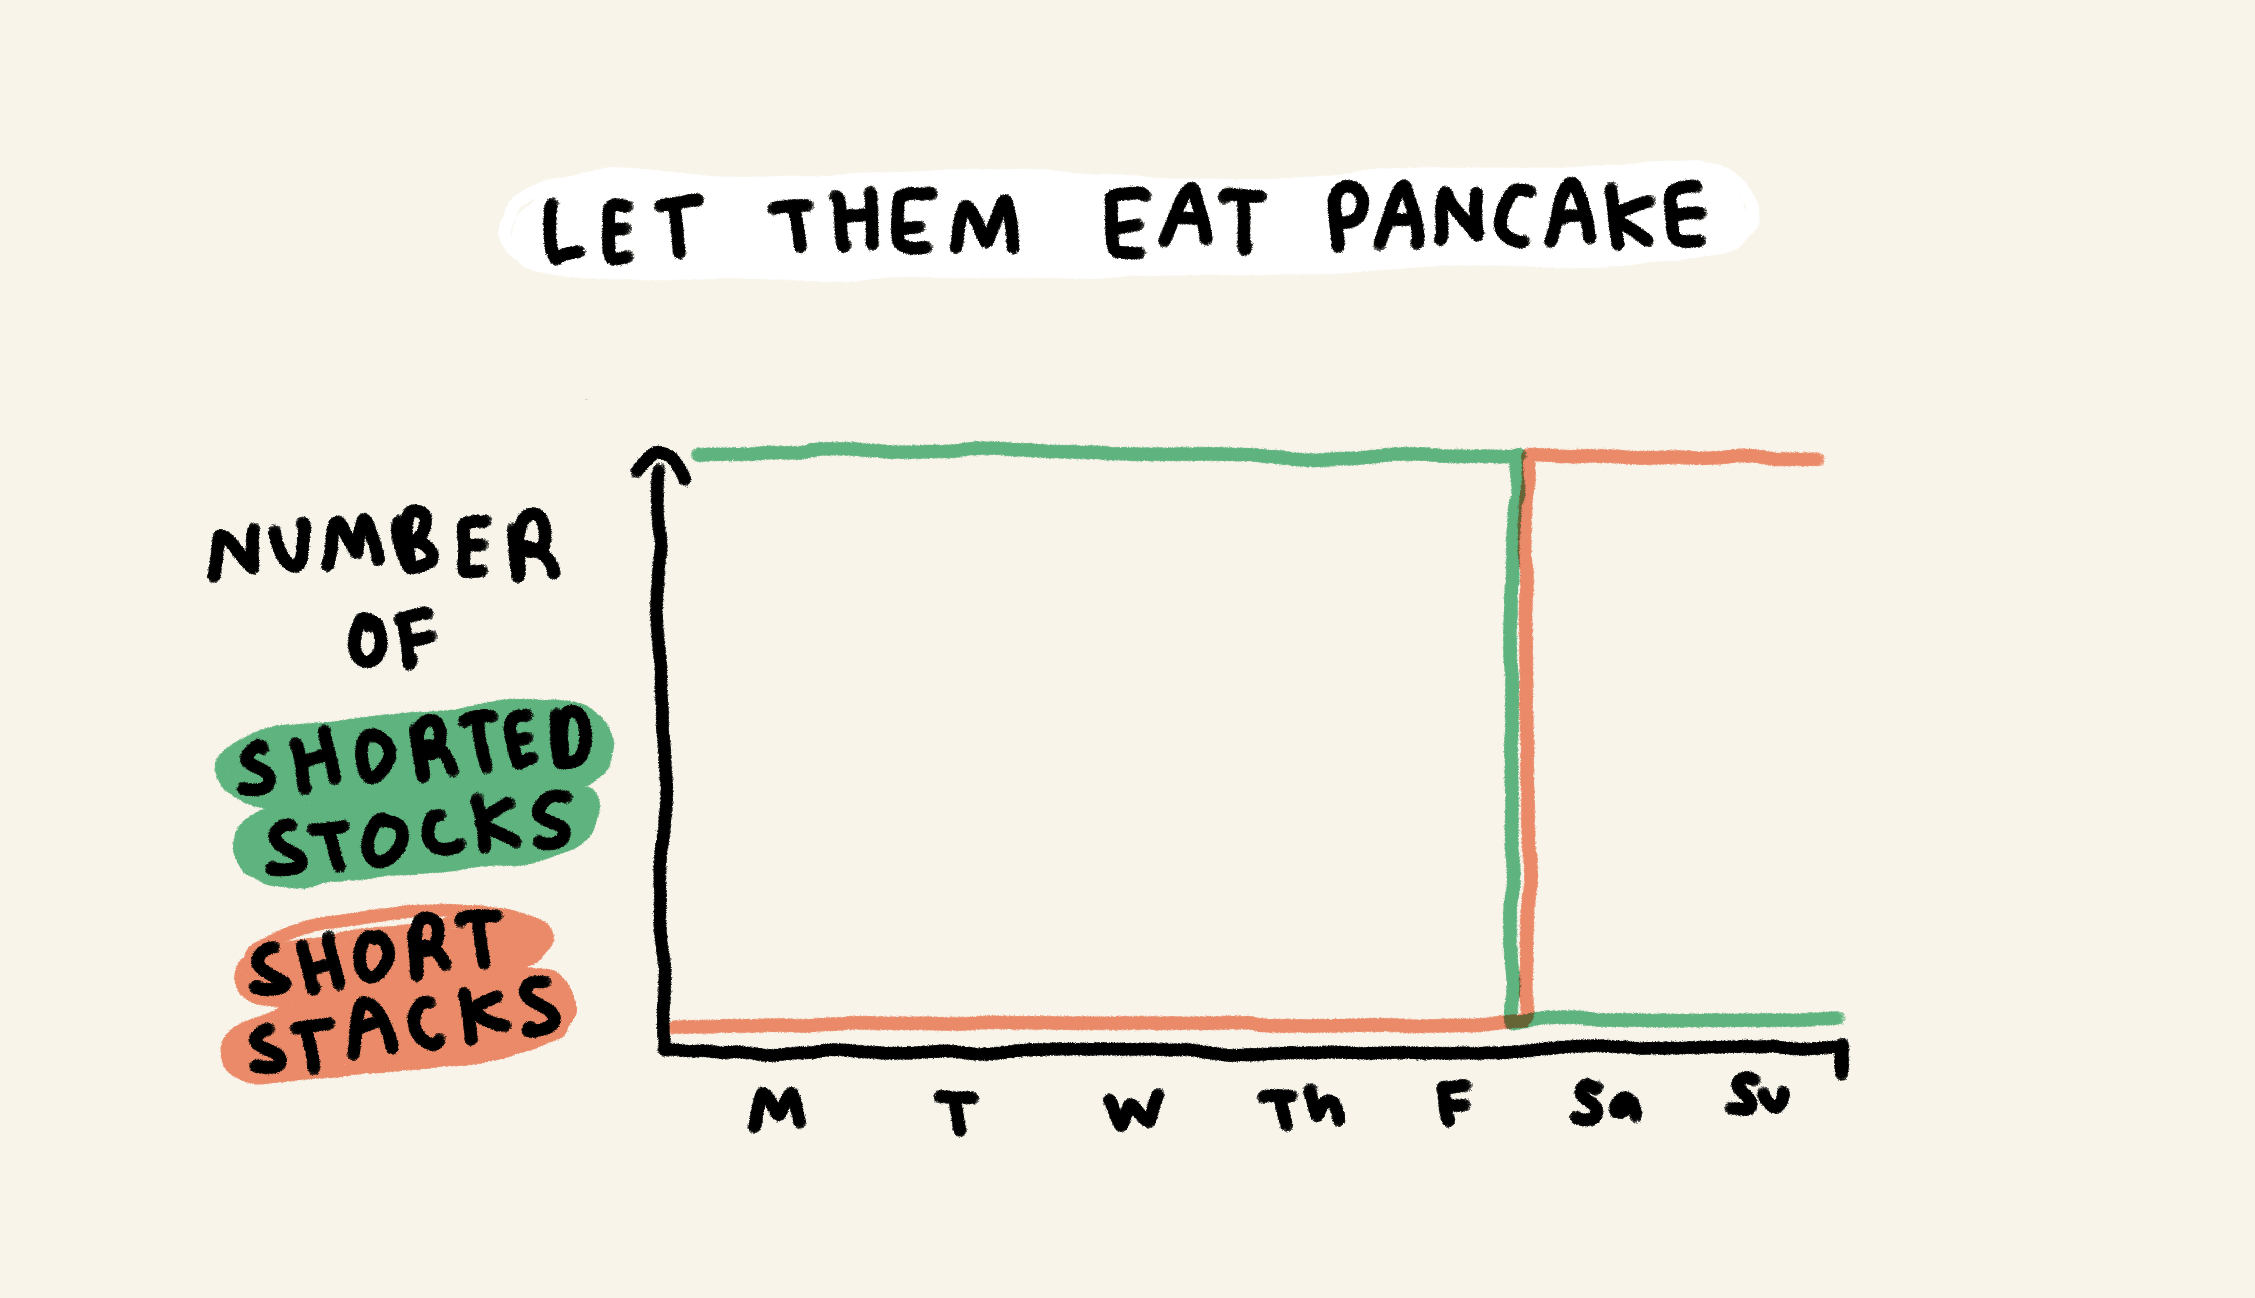 Let them eat pancake

Monday-Friday: shorted stocks
Saturday-Sunday: short stacks